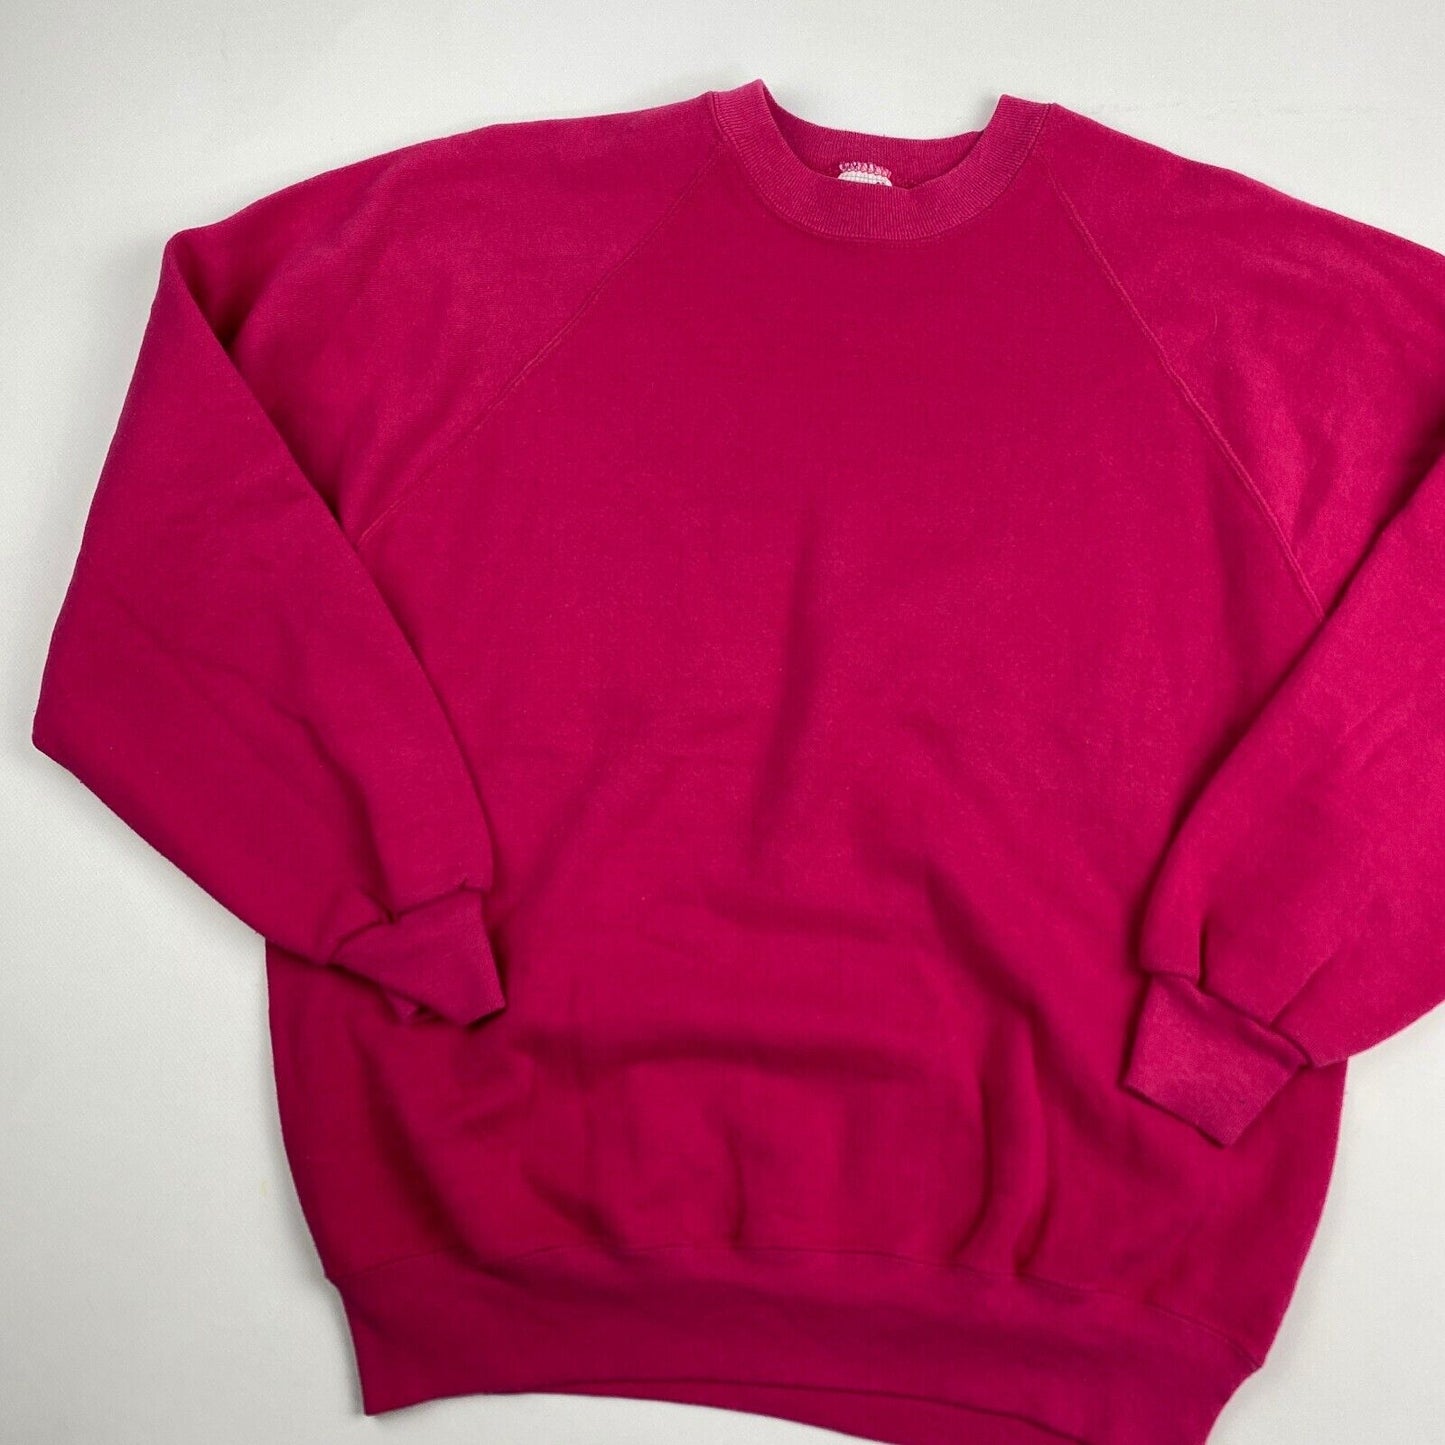 VINTAGE 90s BLANK PINK Jerzees Crewneck Sweater sz XL Mens